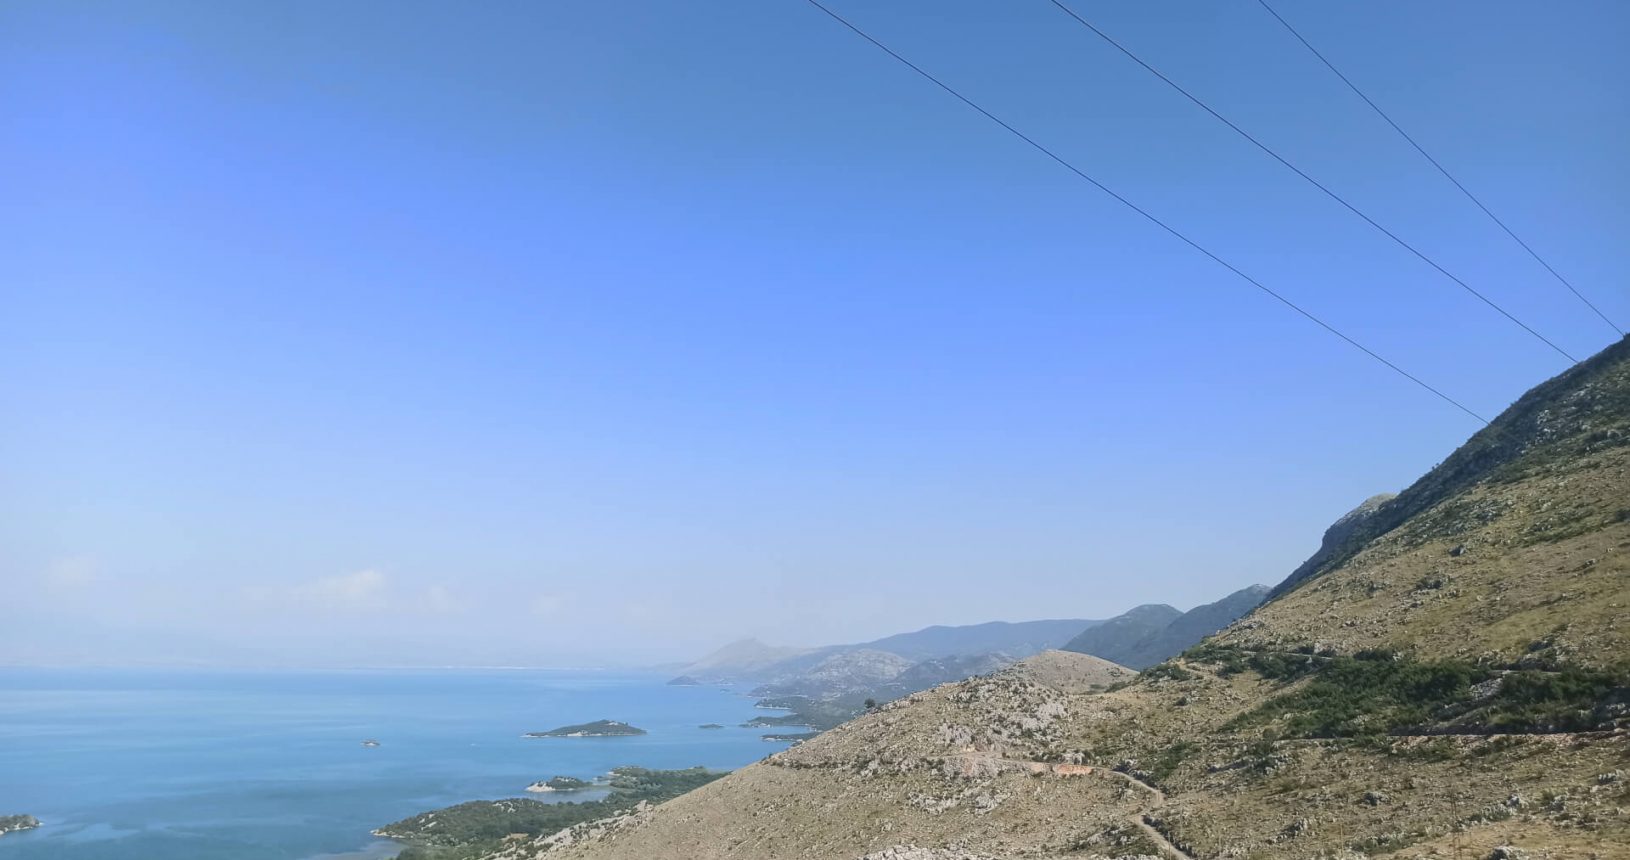 Mountain side and lake. Viewpoint Donji Murici